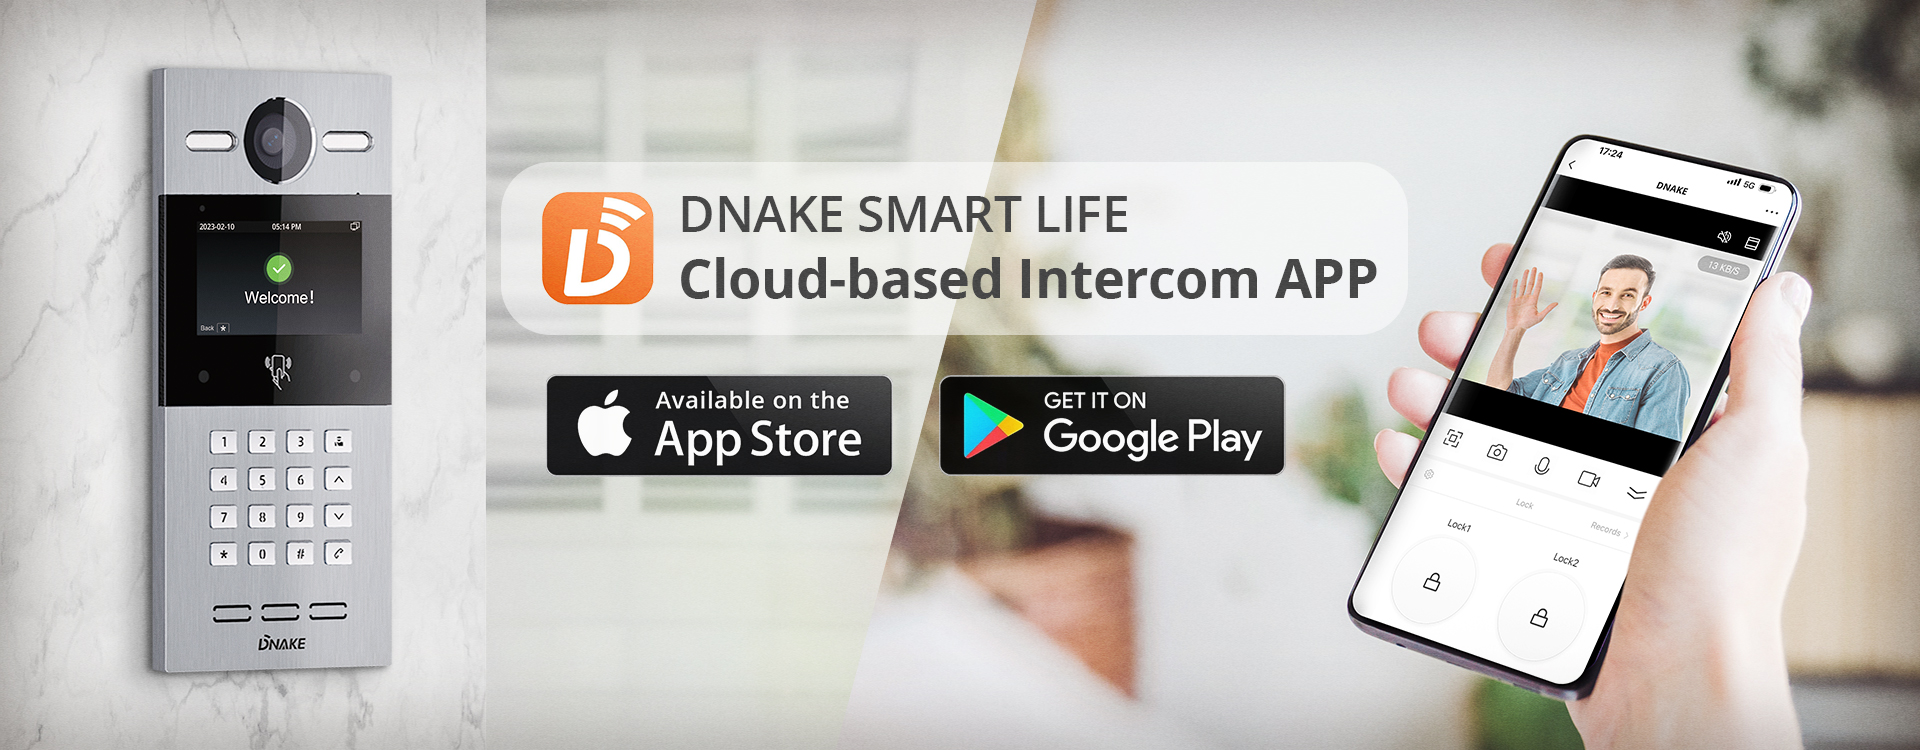 DNAKE Smart Life APP Banner